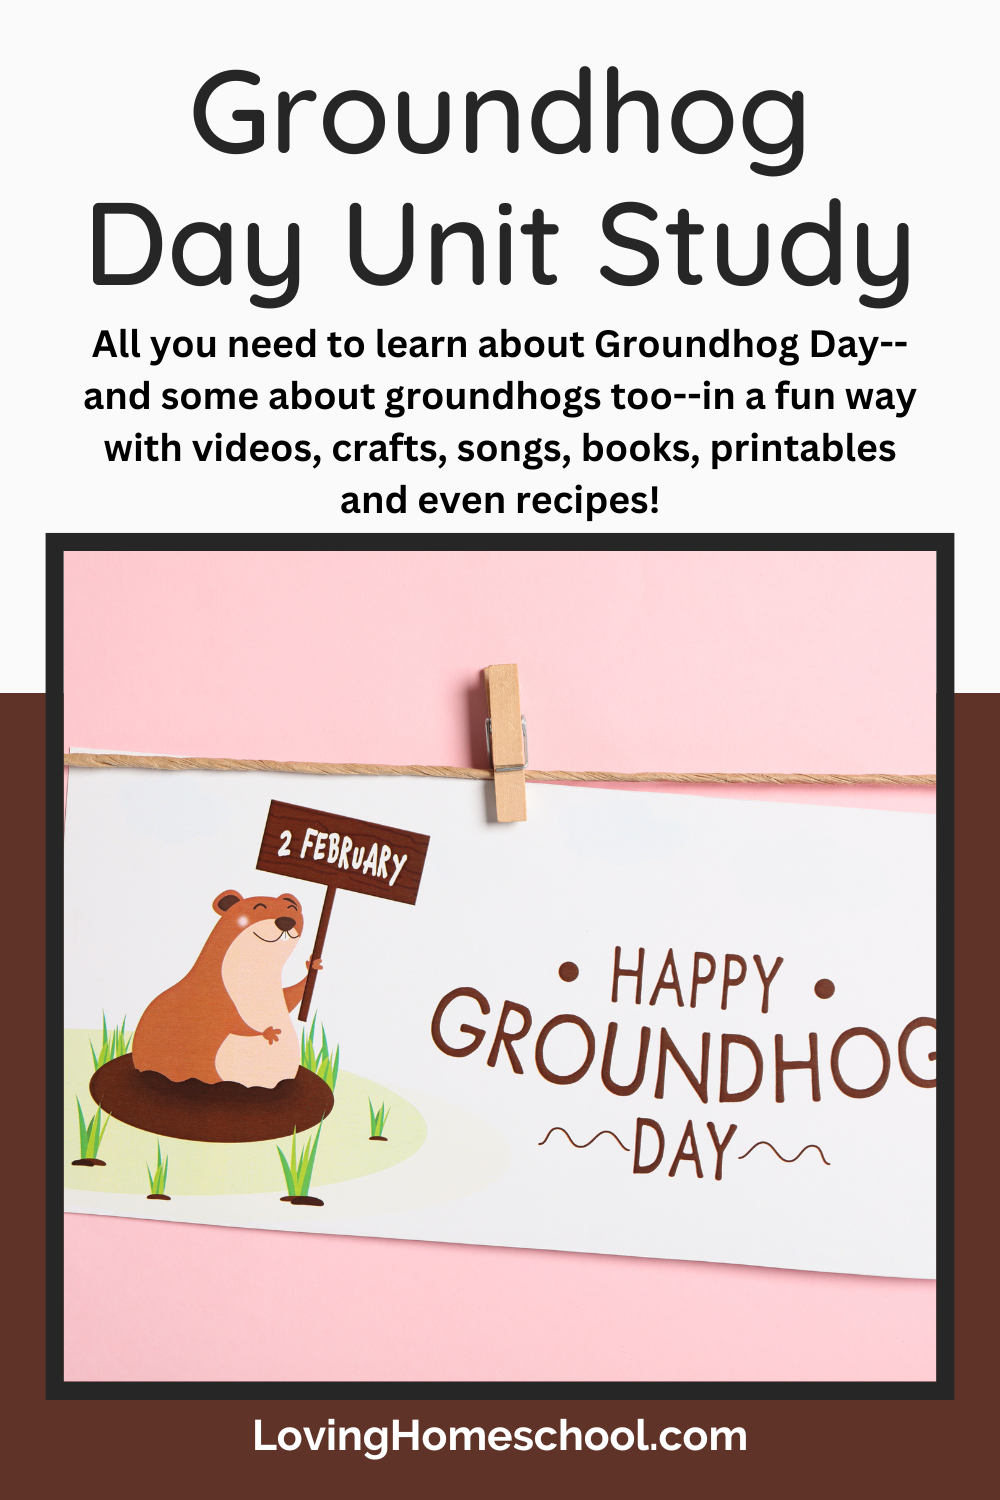 Groundhog Day Unit Study Pinterest Pin